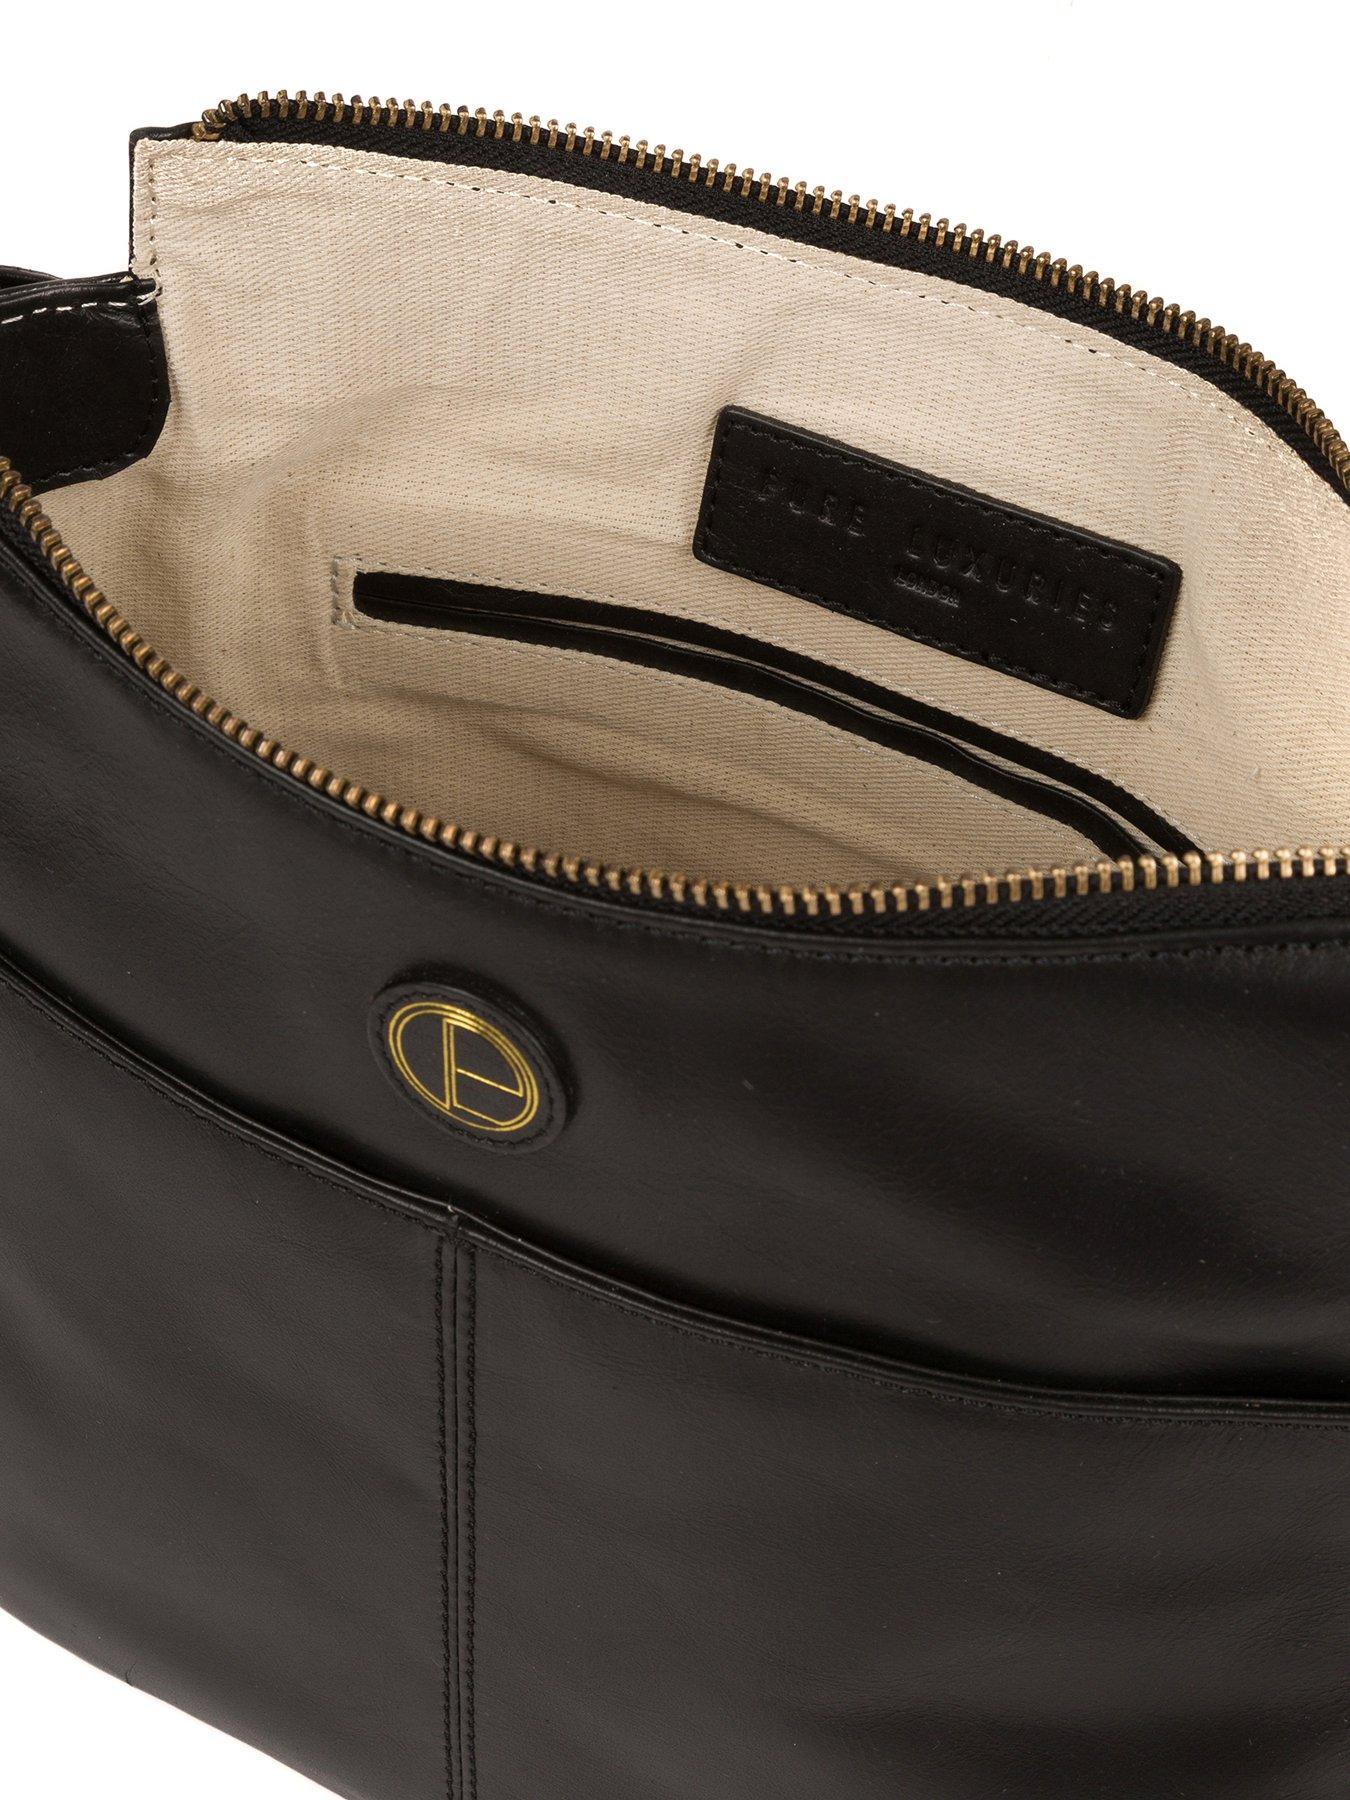 Bags & Purses Farlow Vintage Leather Zip Top Shoulder Bag - Black